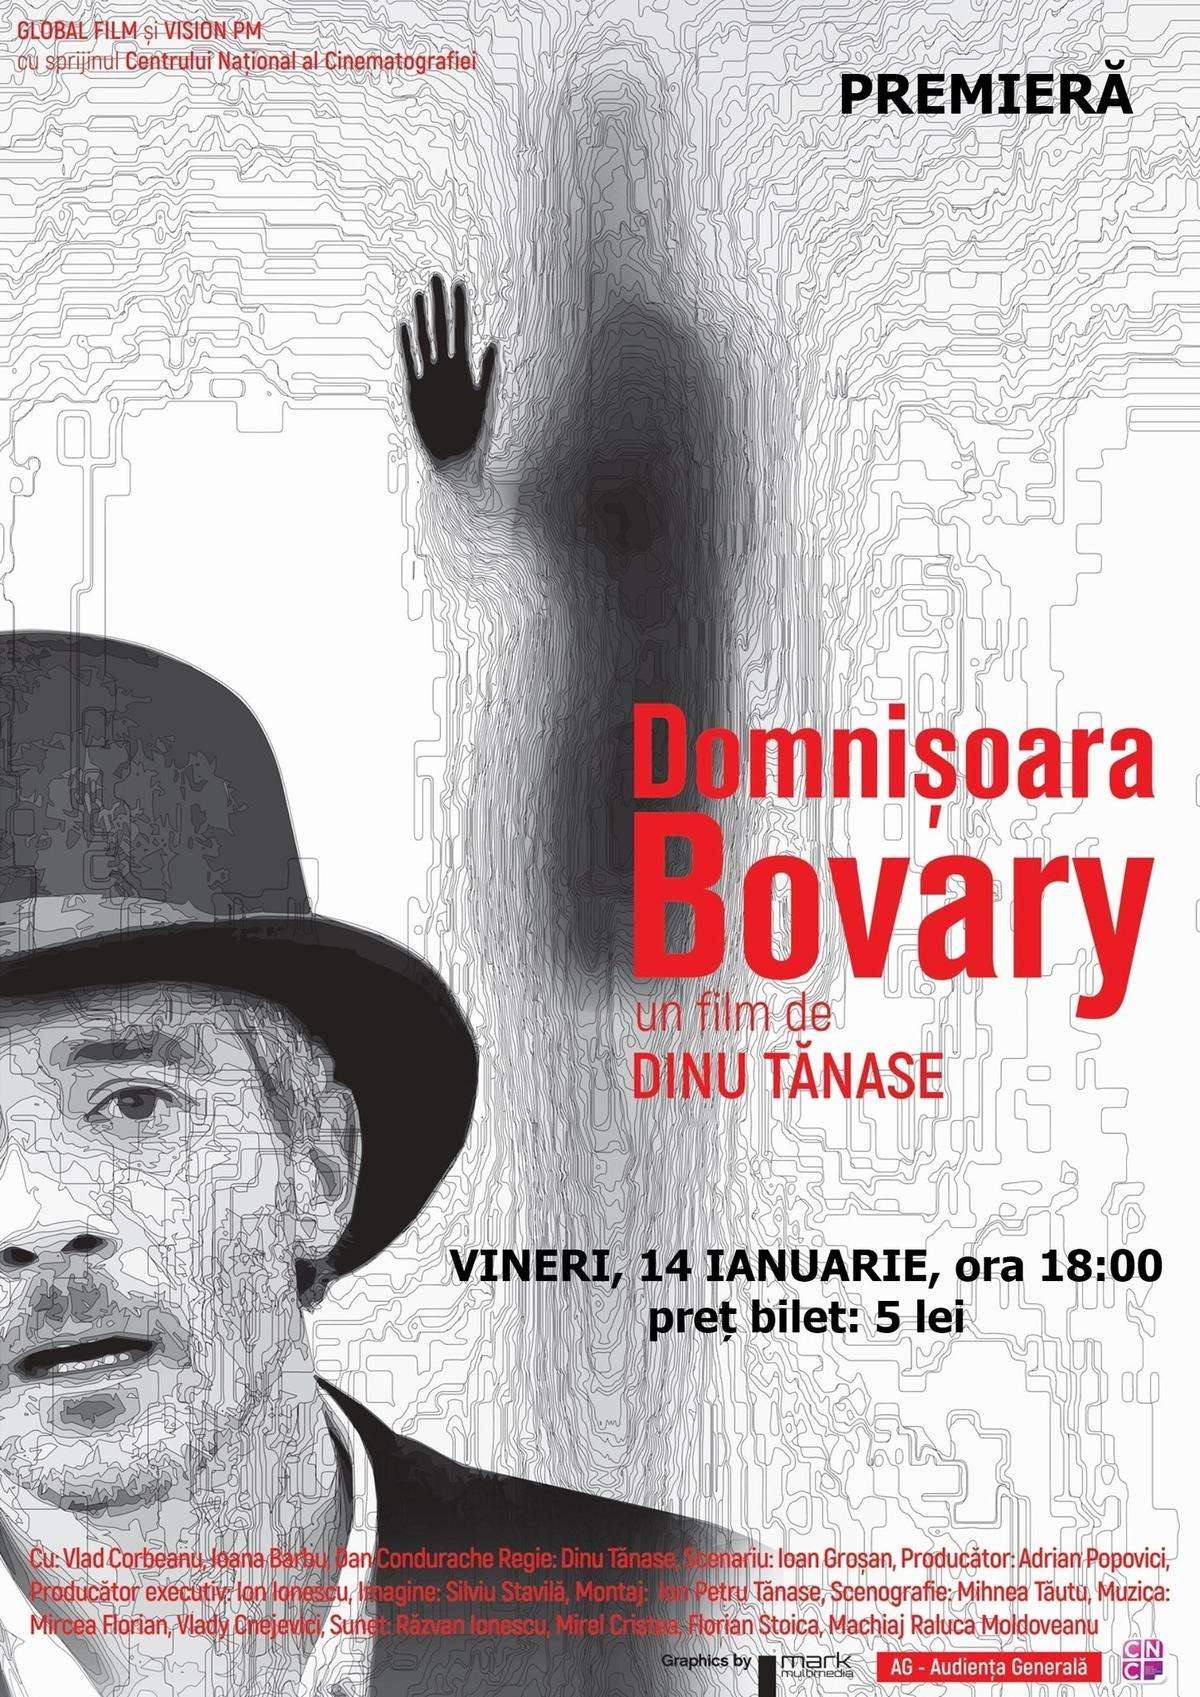 Premiera Cinema Slobozia Domnisoara Bovary